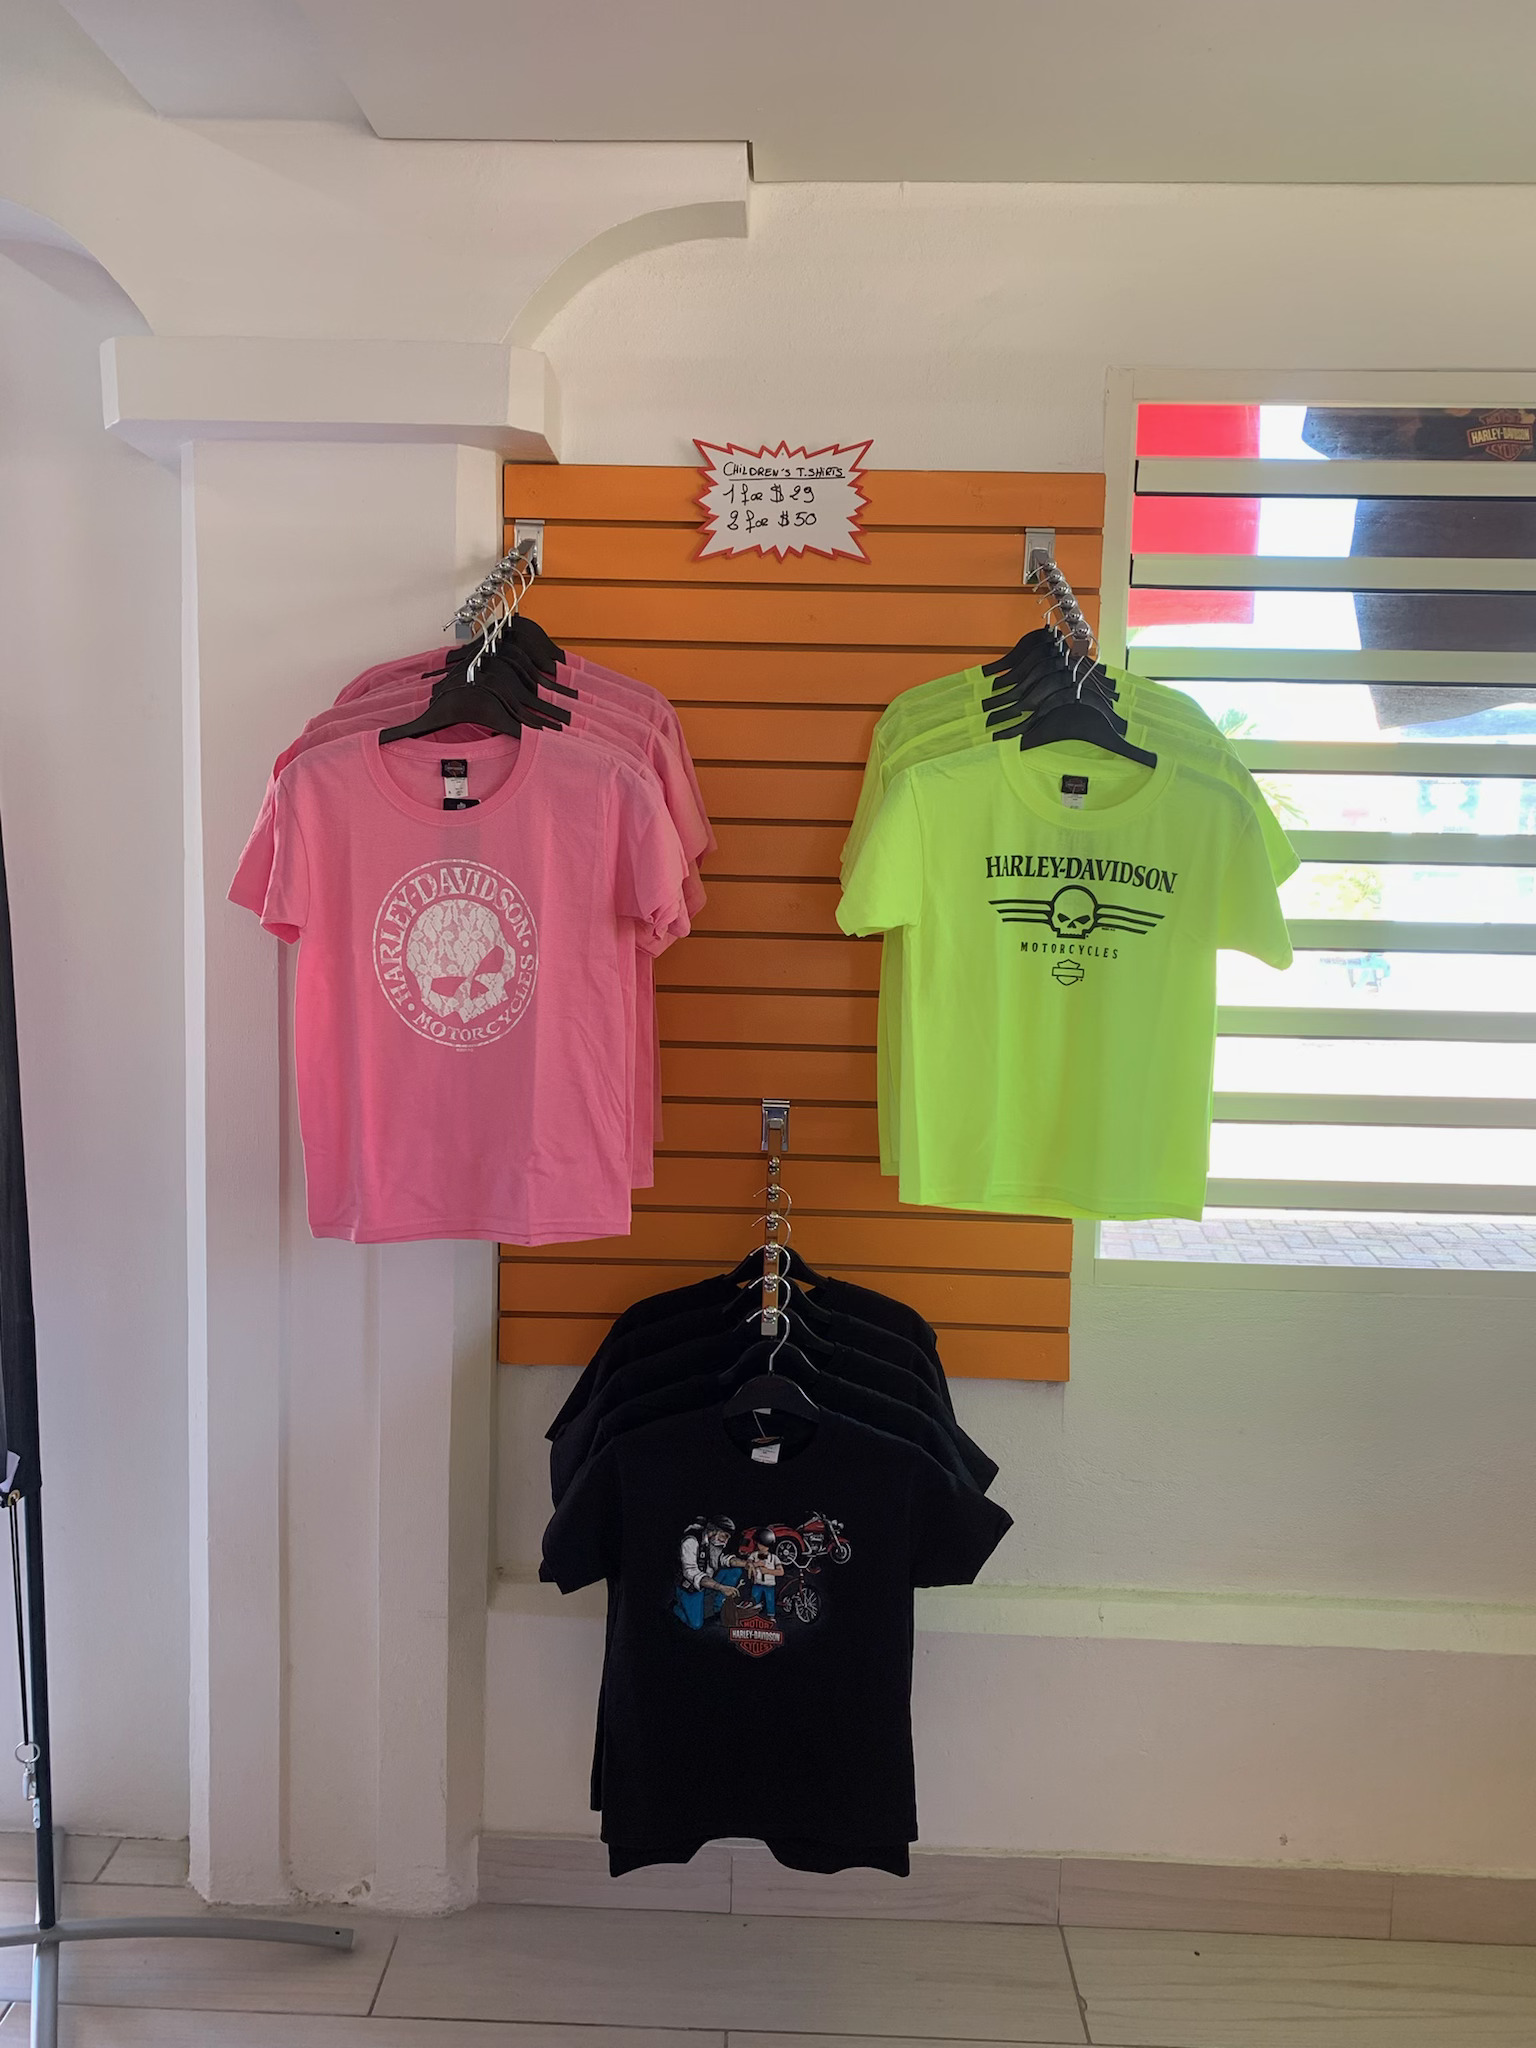 Harley Davidson Sxm Shop - Sint Maarten